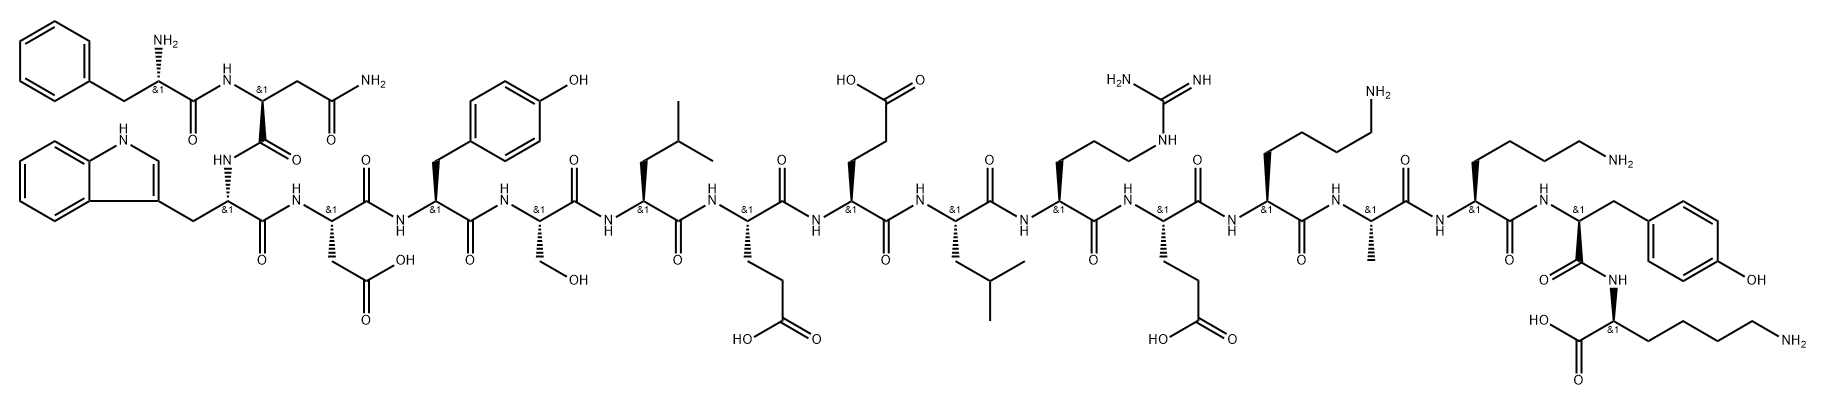 L-Lysine, L-phenylalanyl-L-asparaginyl-L-tryptophyl-L-α-aspartyl-L-tyrosyl-L-seryl-L-leucyl-L-α-glutamyl-L-α-glutamyl-L-leucyl-L-arginyl-L-α-glutamyl-L-lysyl-L-alanyl-L-lysyl-L-tyrosyl- Struktur